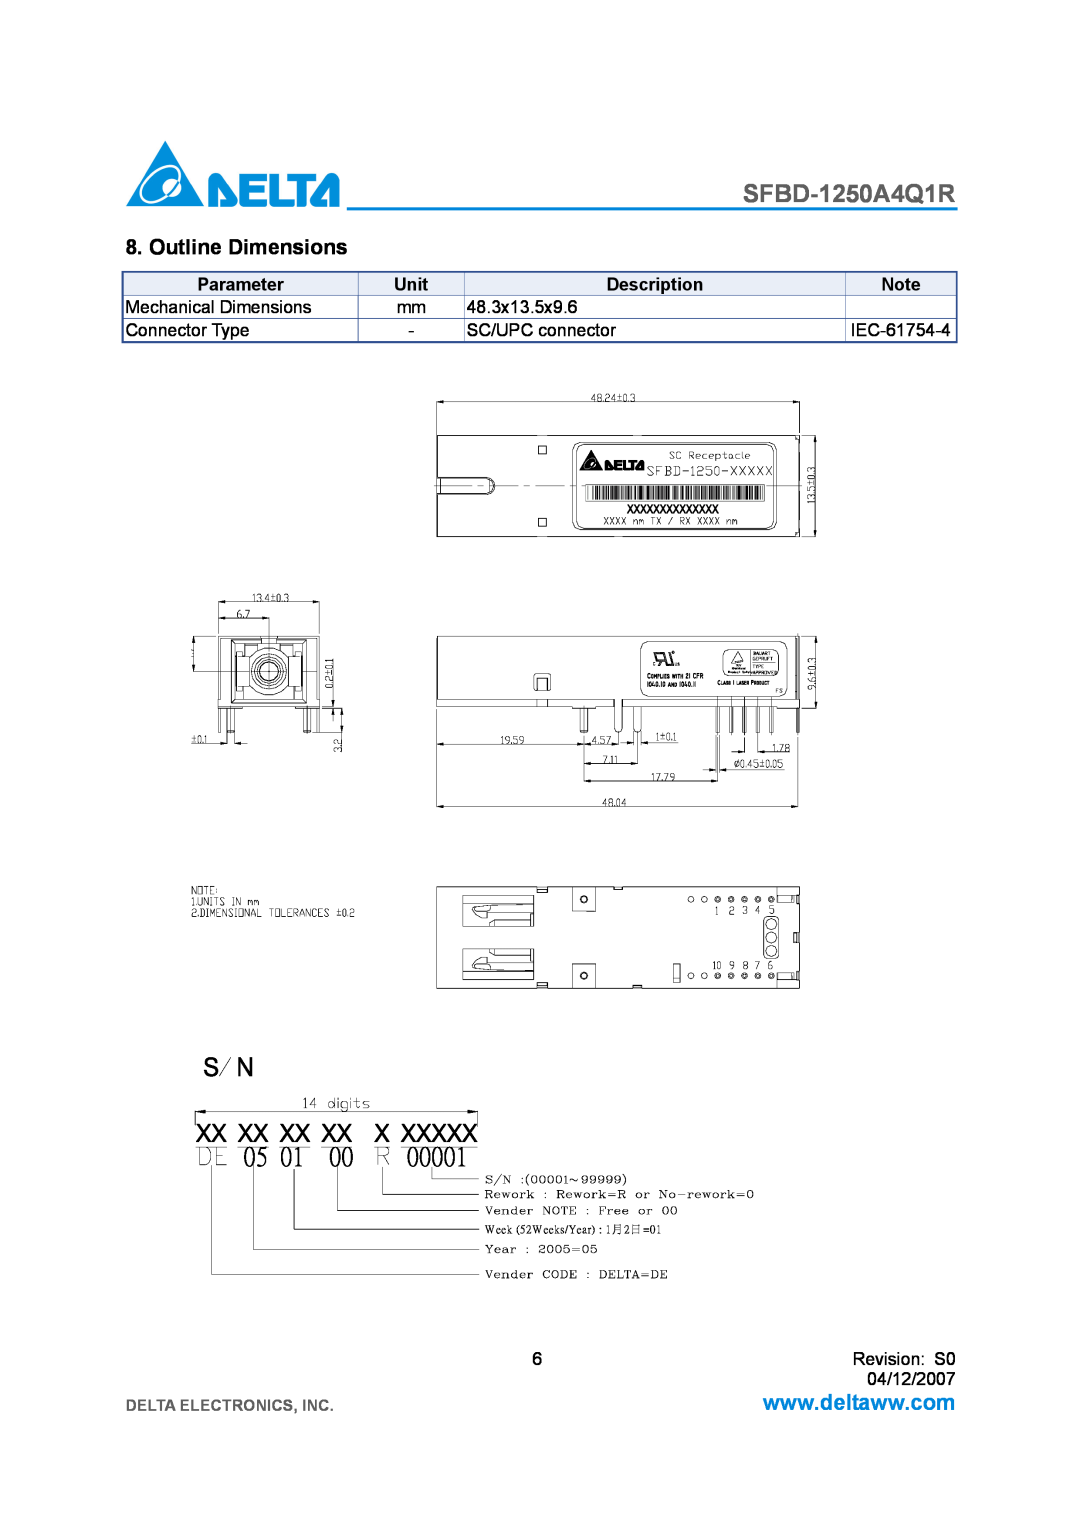 Delta Electronics SFBD-1250A4Q1R manual Outline Dimensions, Delta Electronics, Inc, W eek 52W eeks/Year 1月 2日 =01 